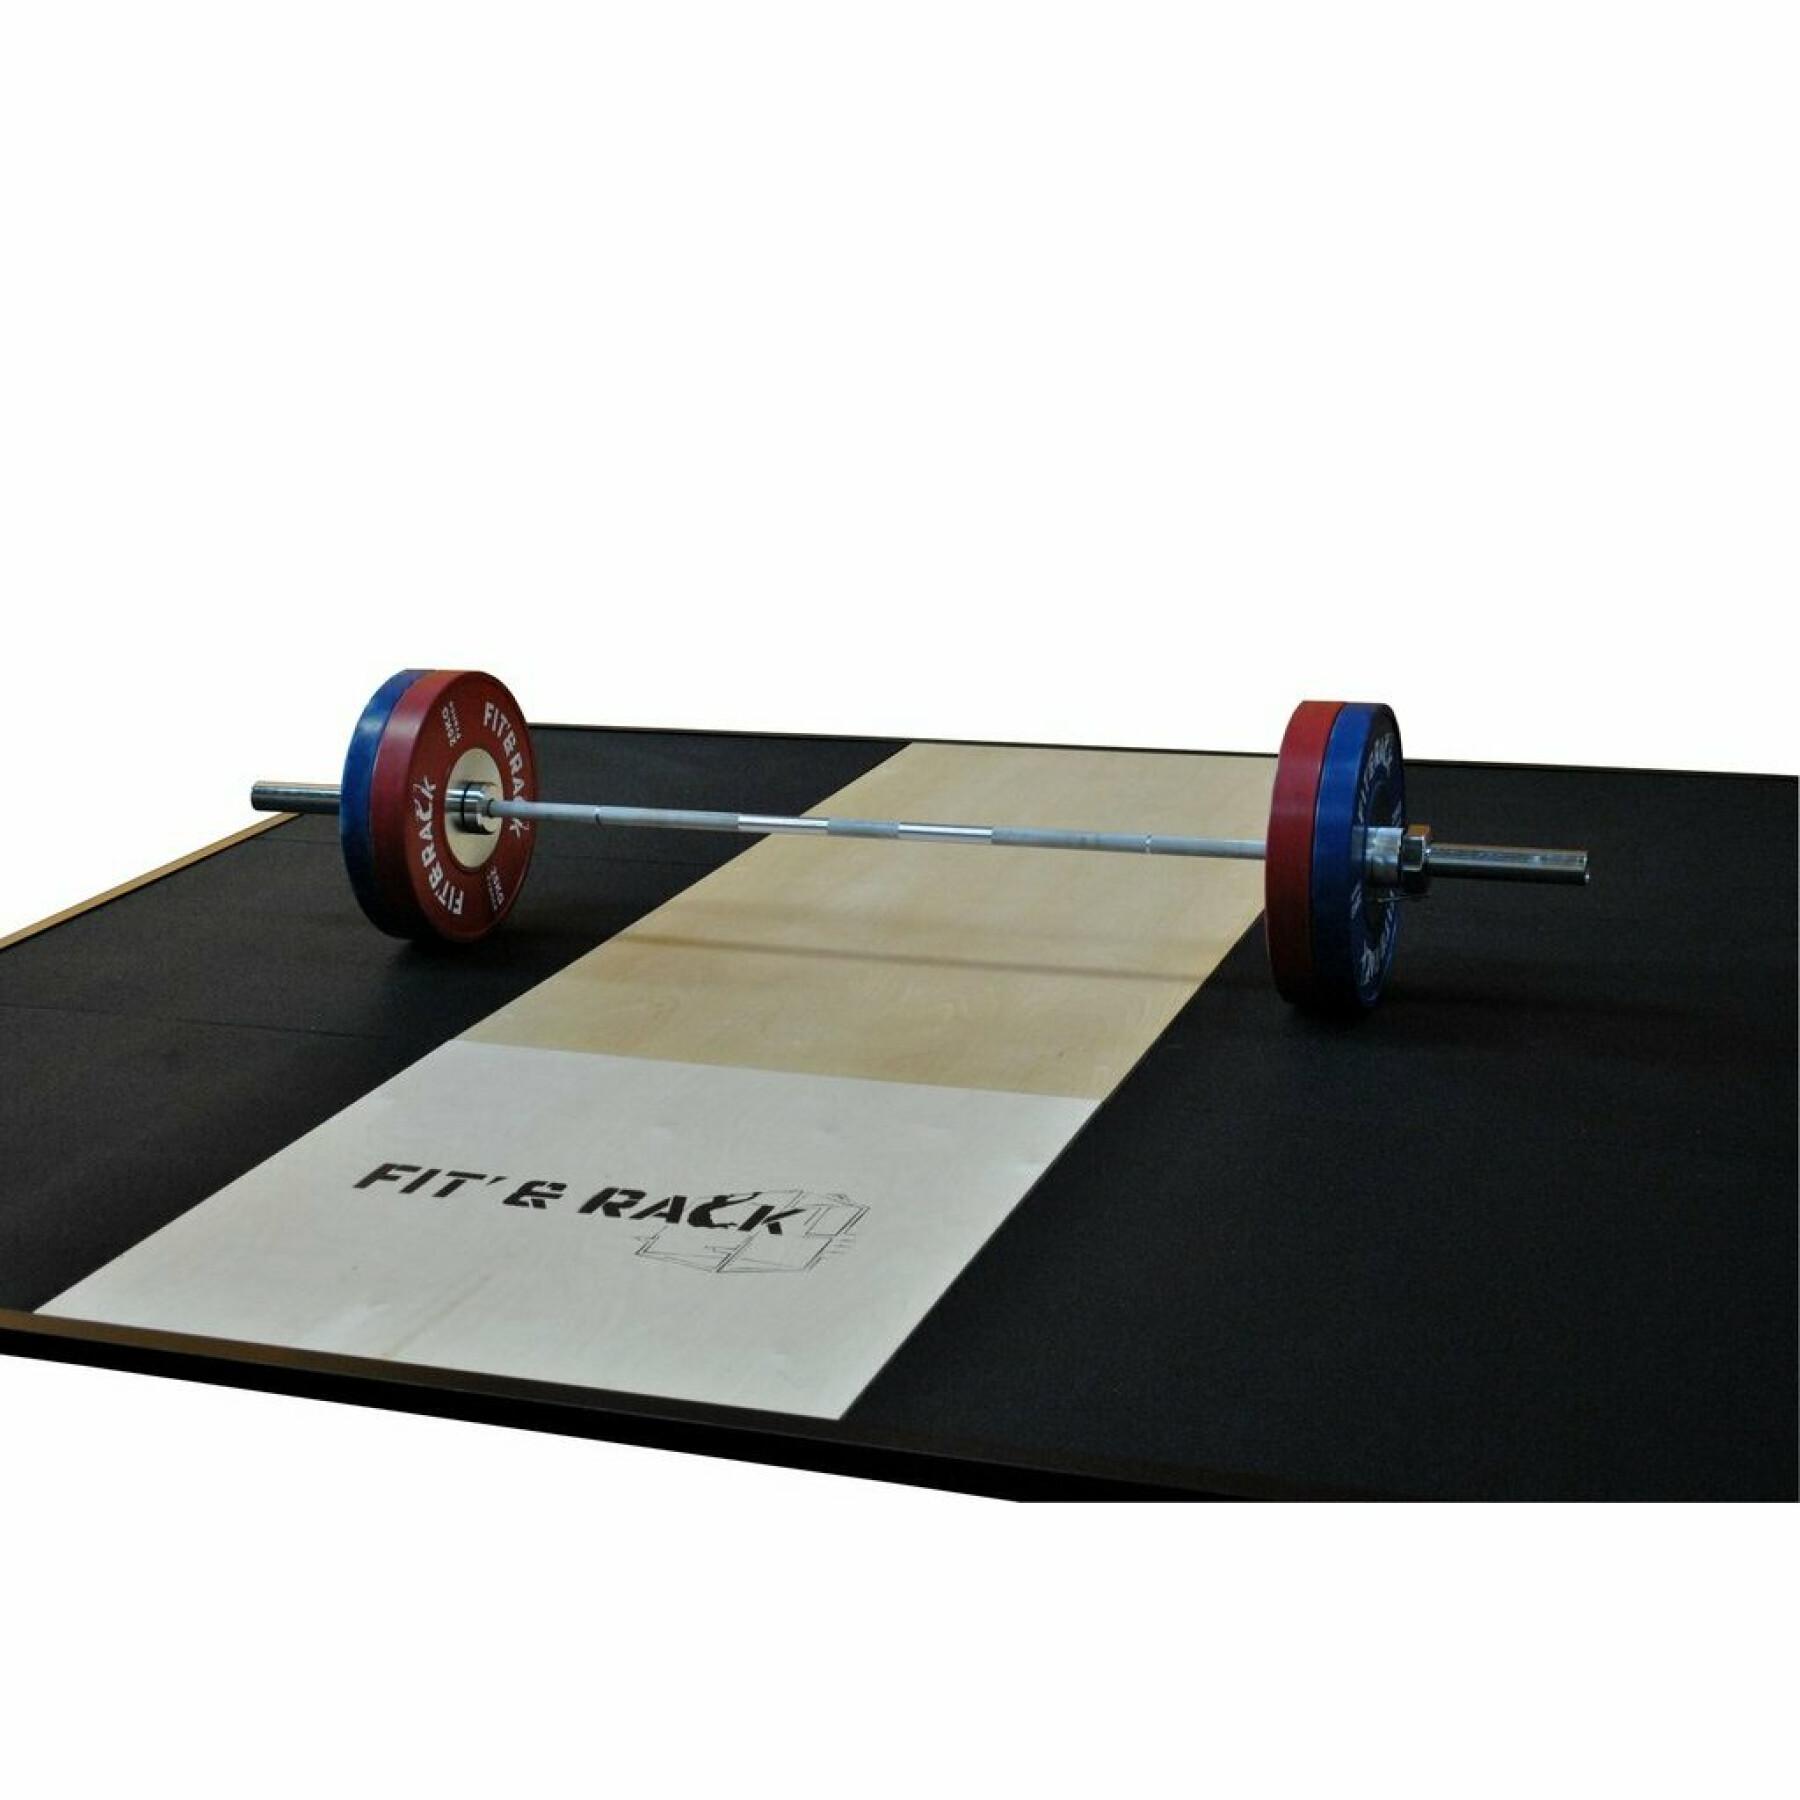 Weightlifting platform Fit & Rack 1mx3m Ep25